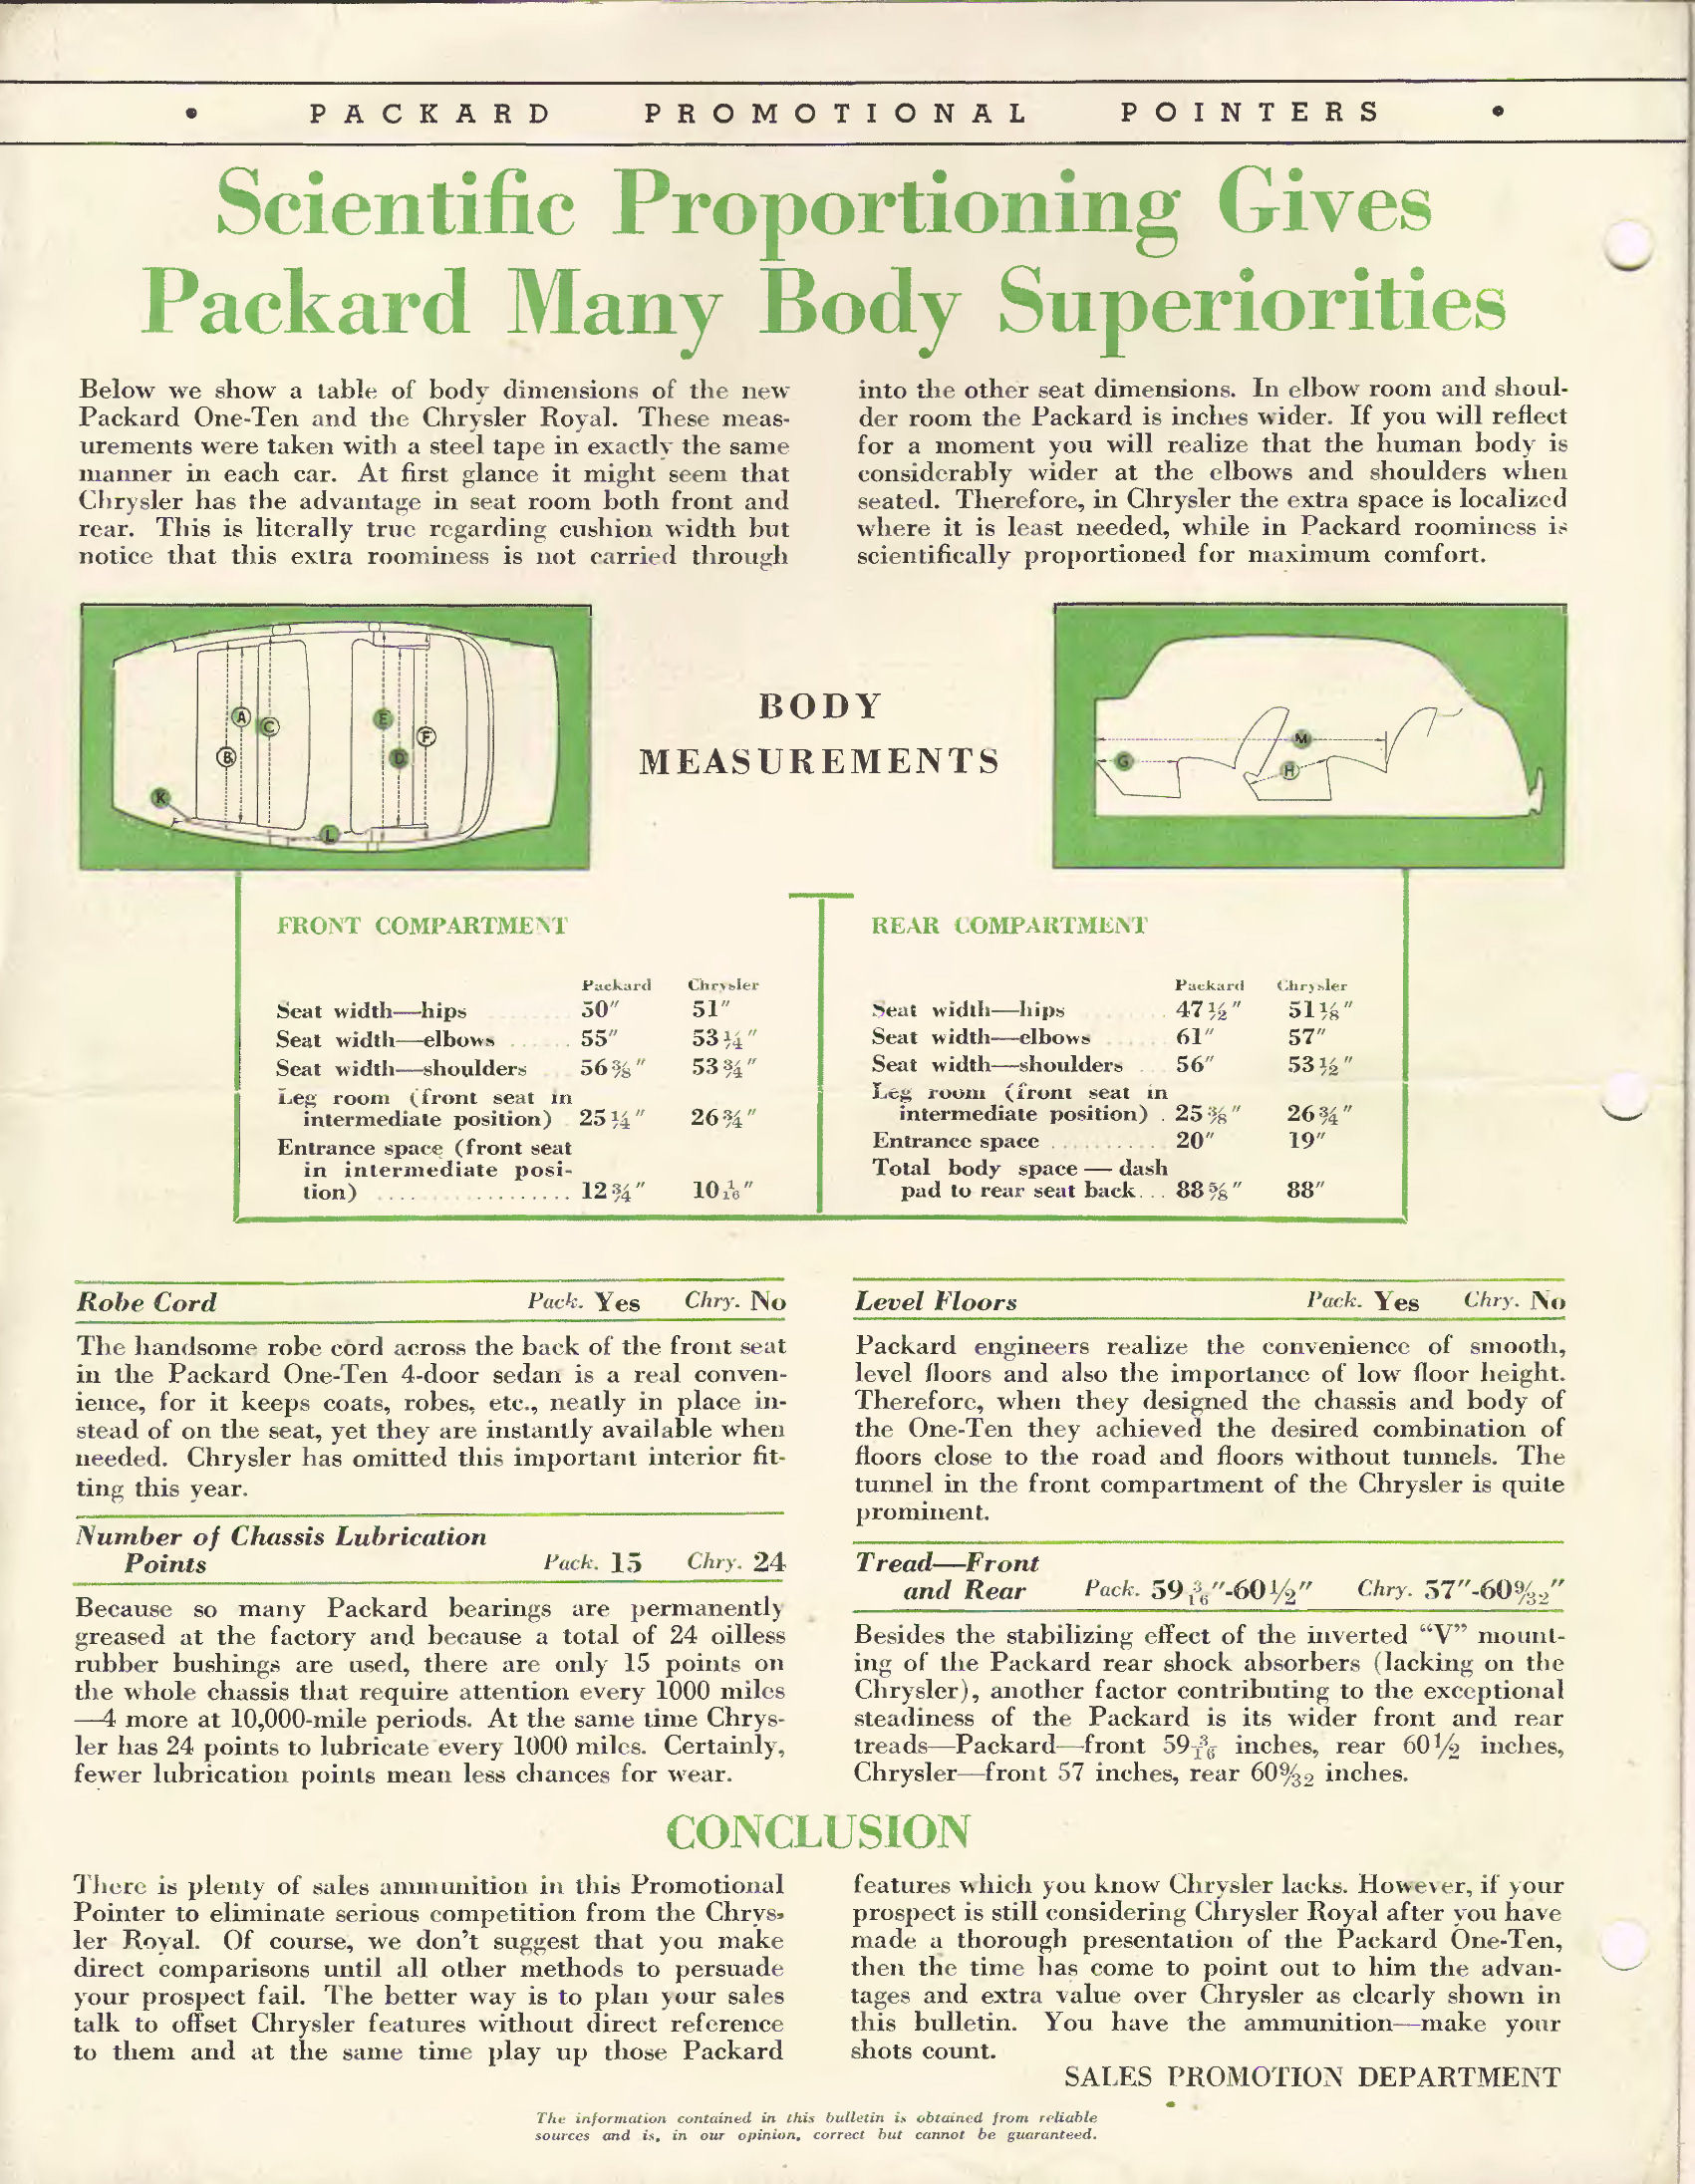 1940 Packard vs Chrysler Comparison Folder Page 2